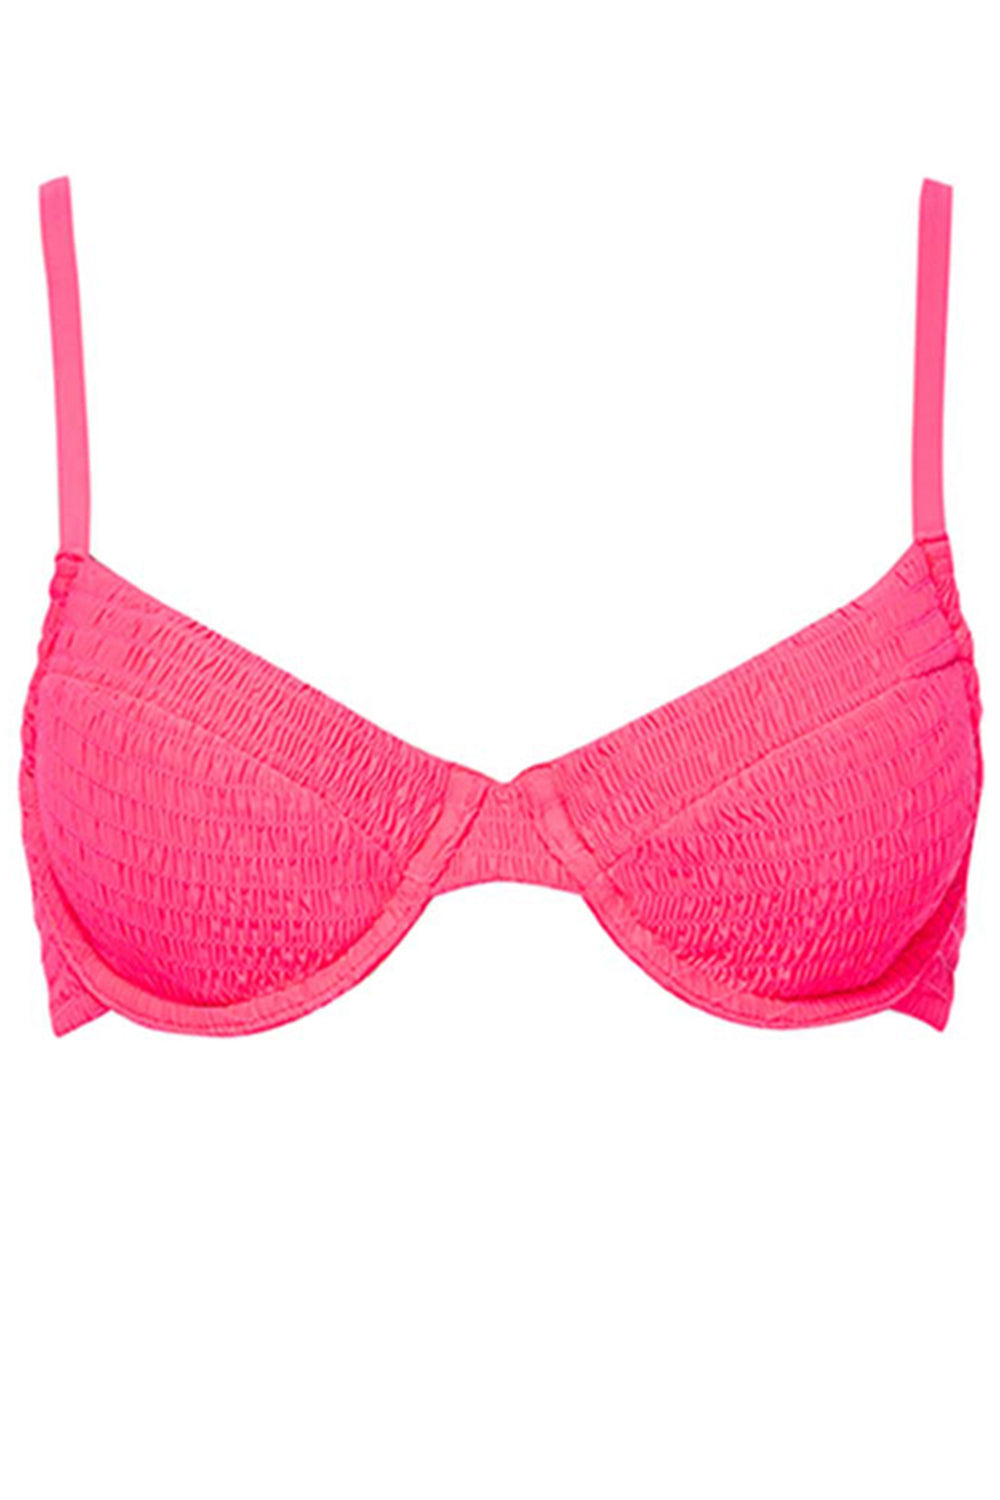 Cabo Bikini Hot Pink Set